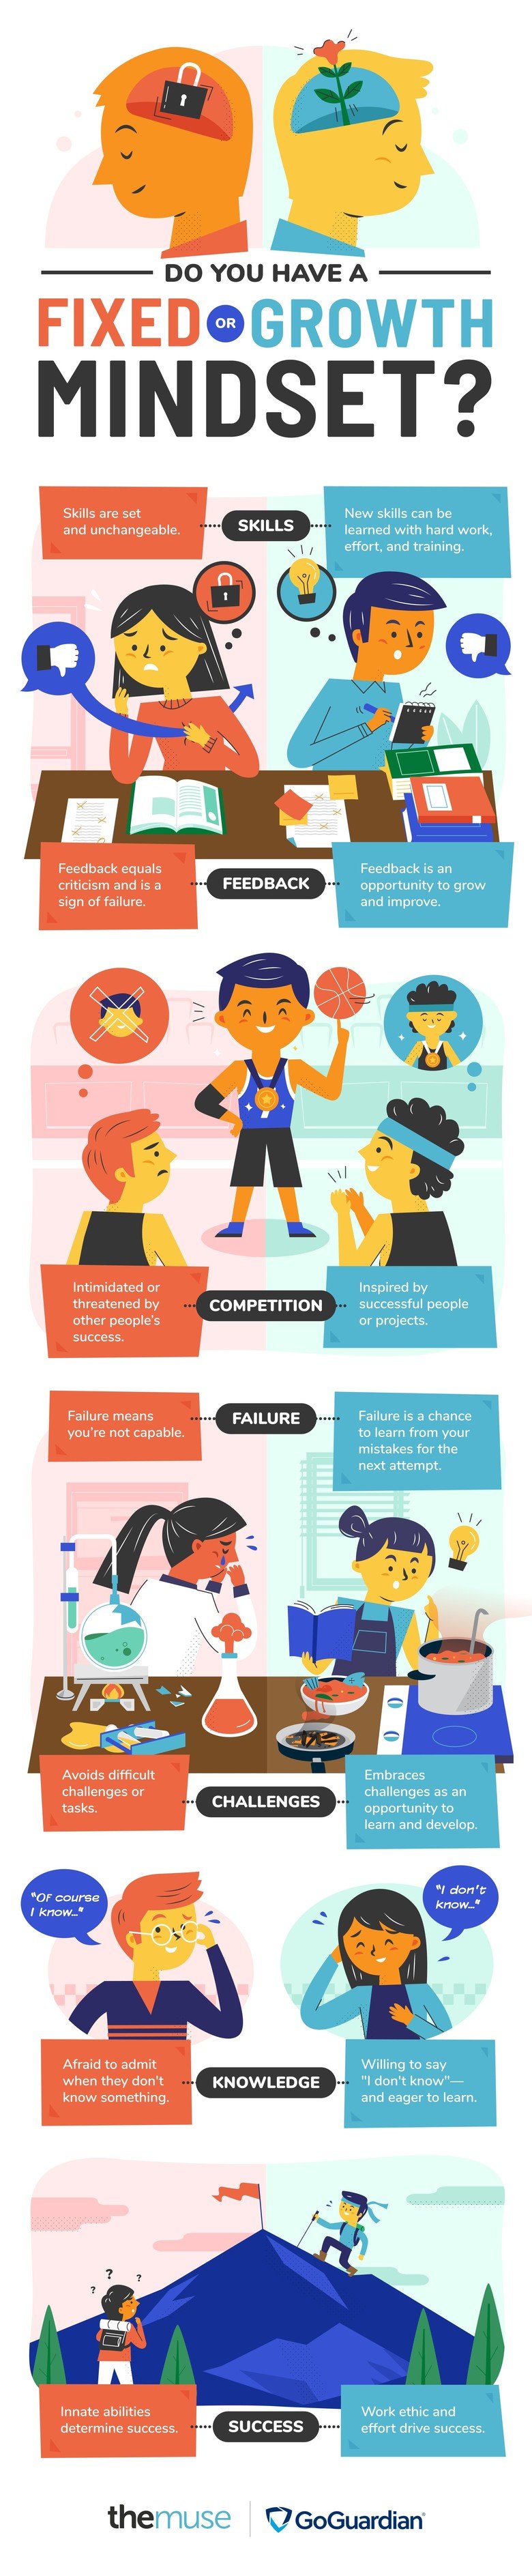 infographic illustrating fixed mindset vs growth mindset, full text below